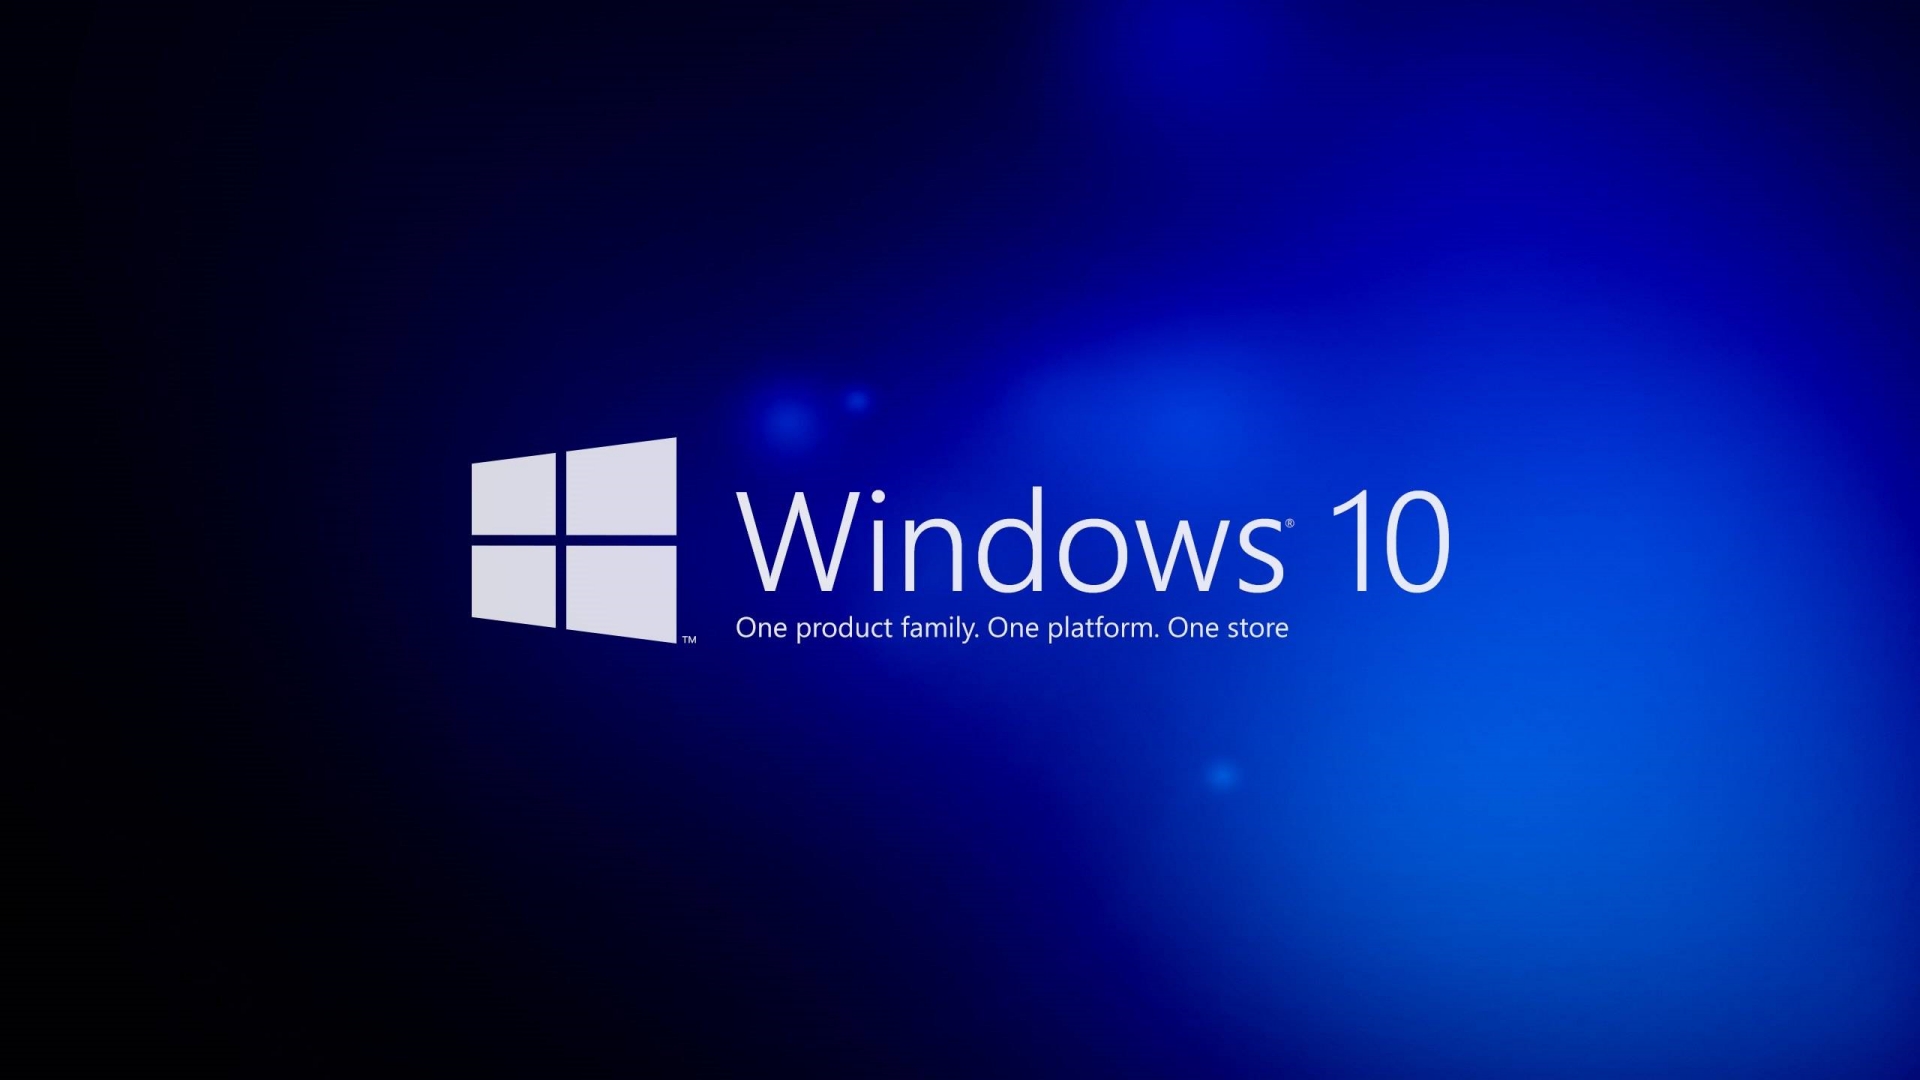 Windows-10-Wallpaper-1920x1080.jpg